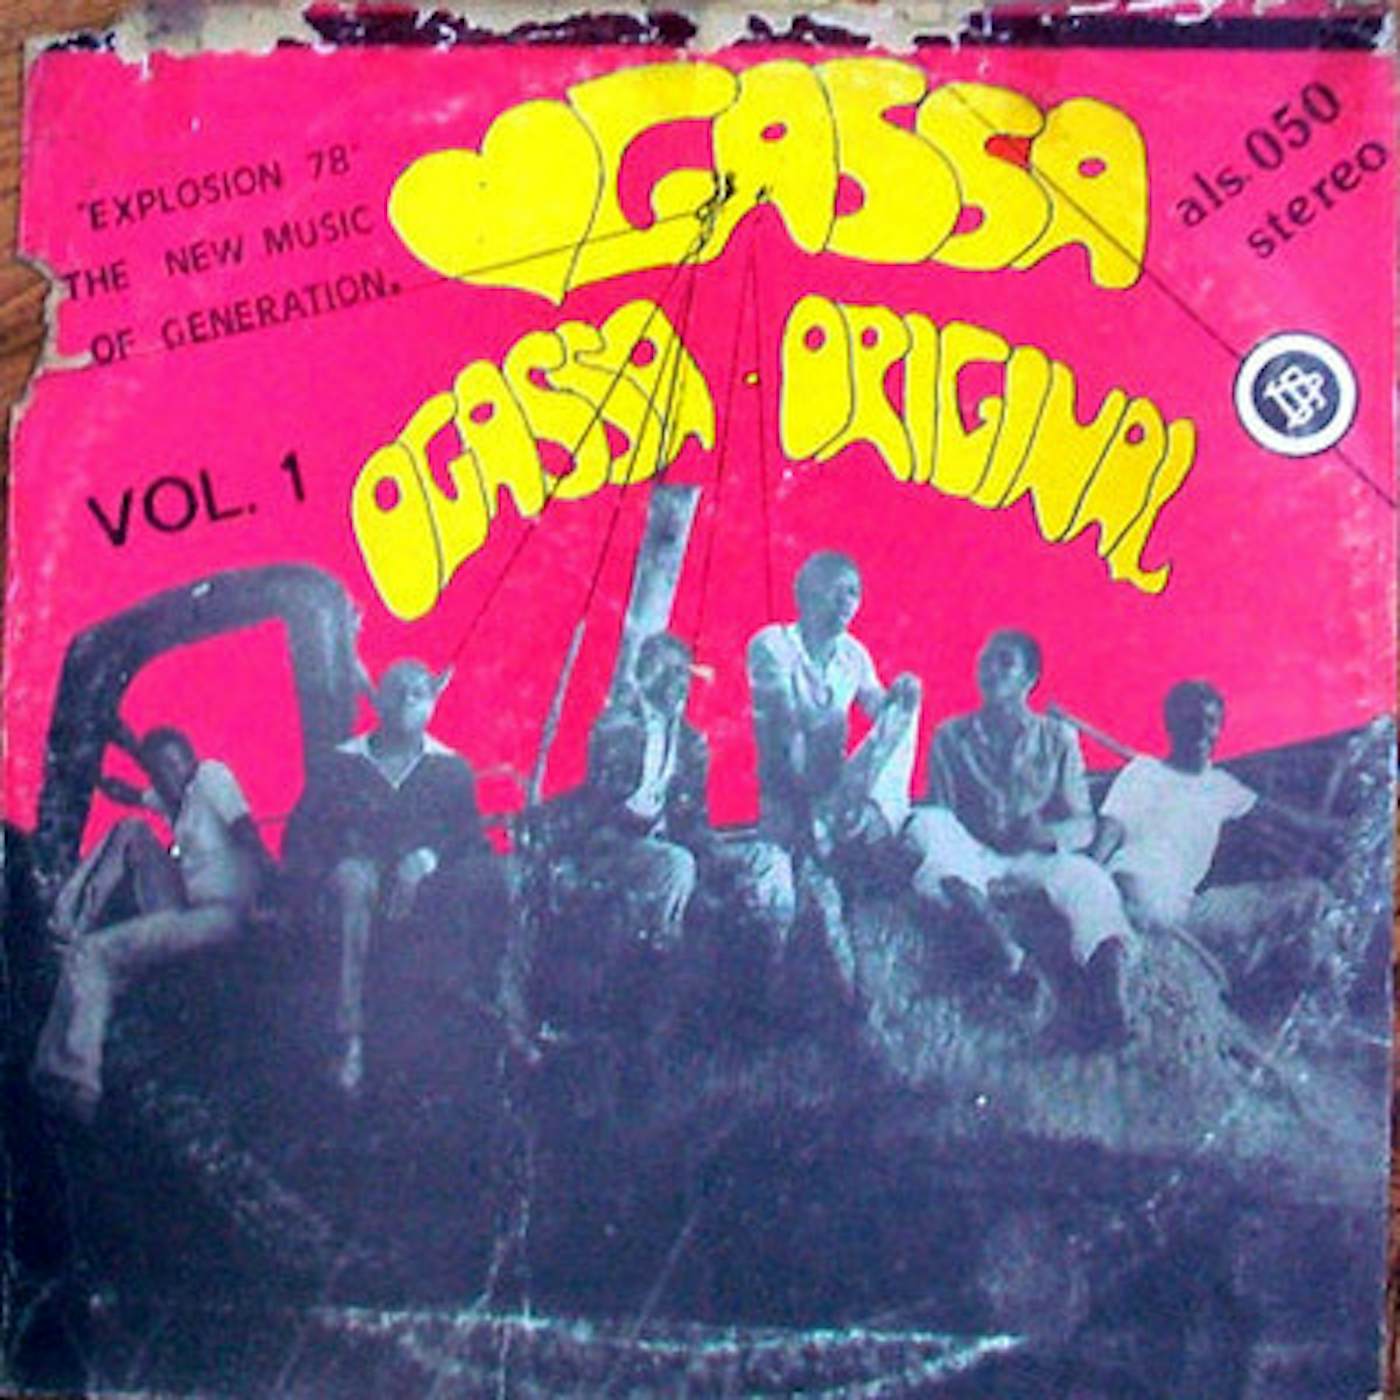 Ogassa Story Vinyl Record